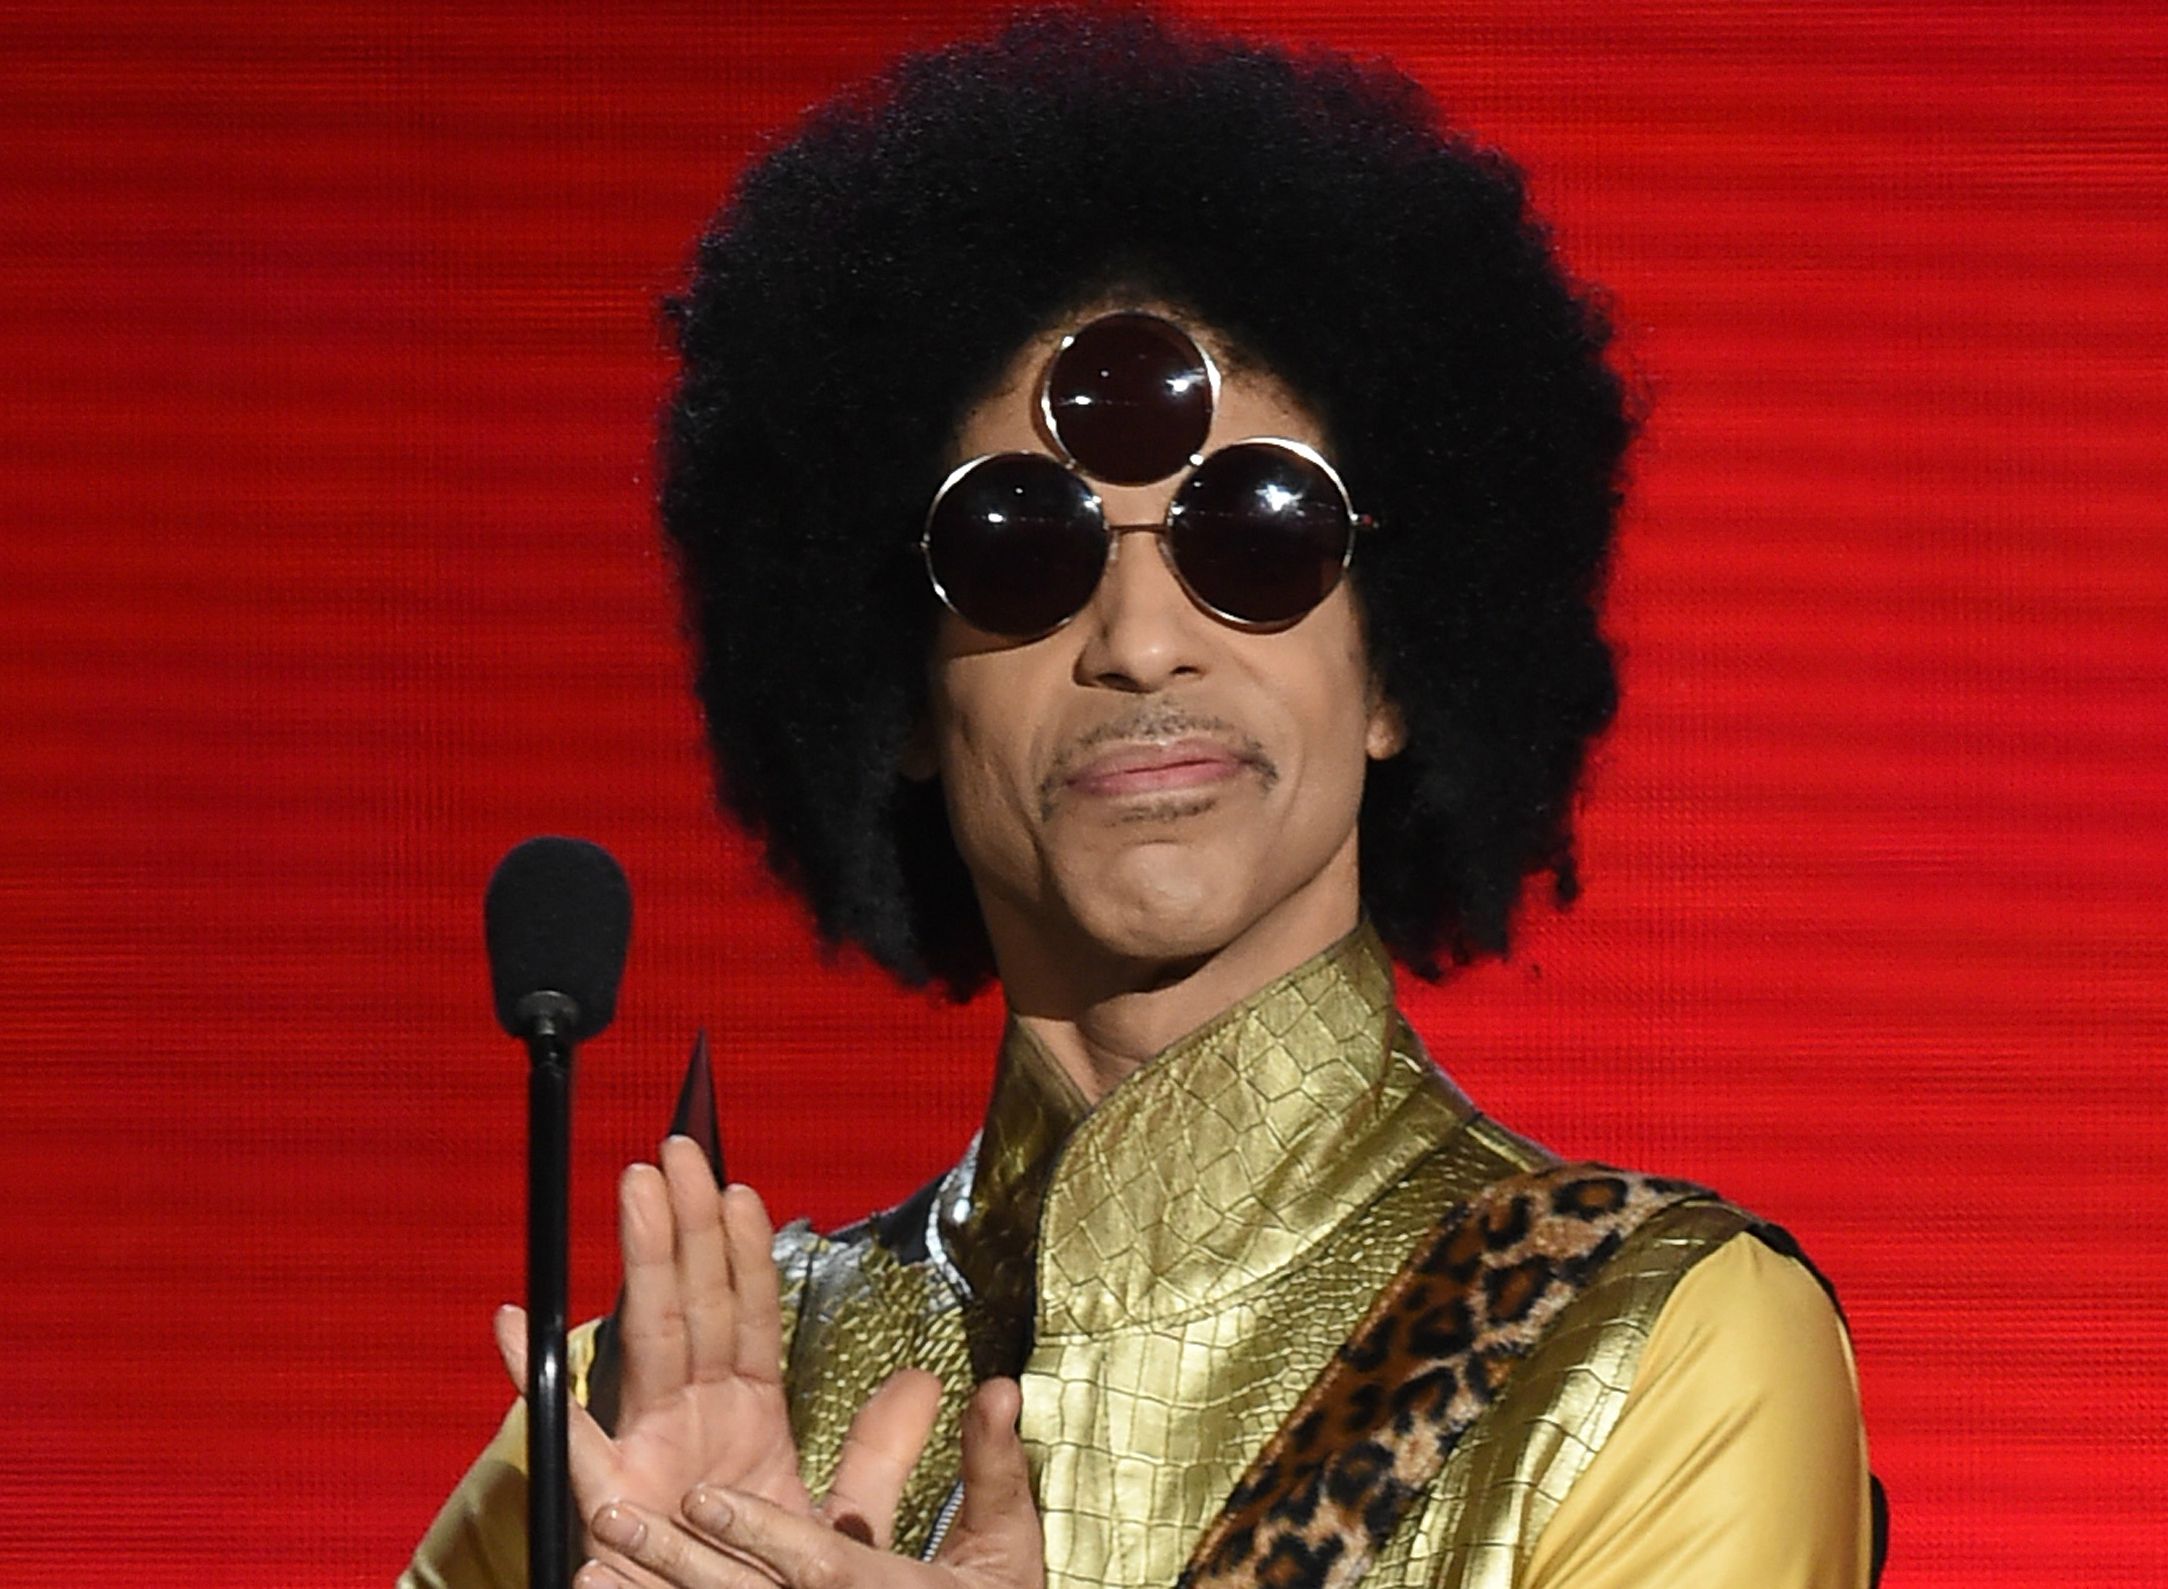 Prince at 2015 American Music Awards